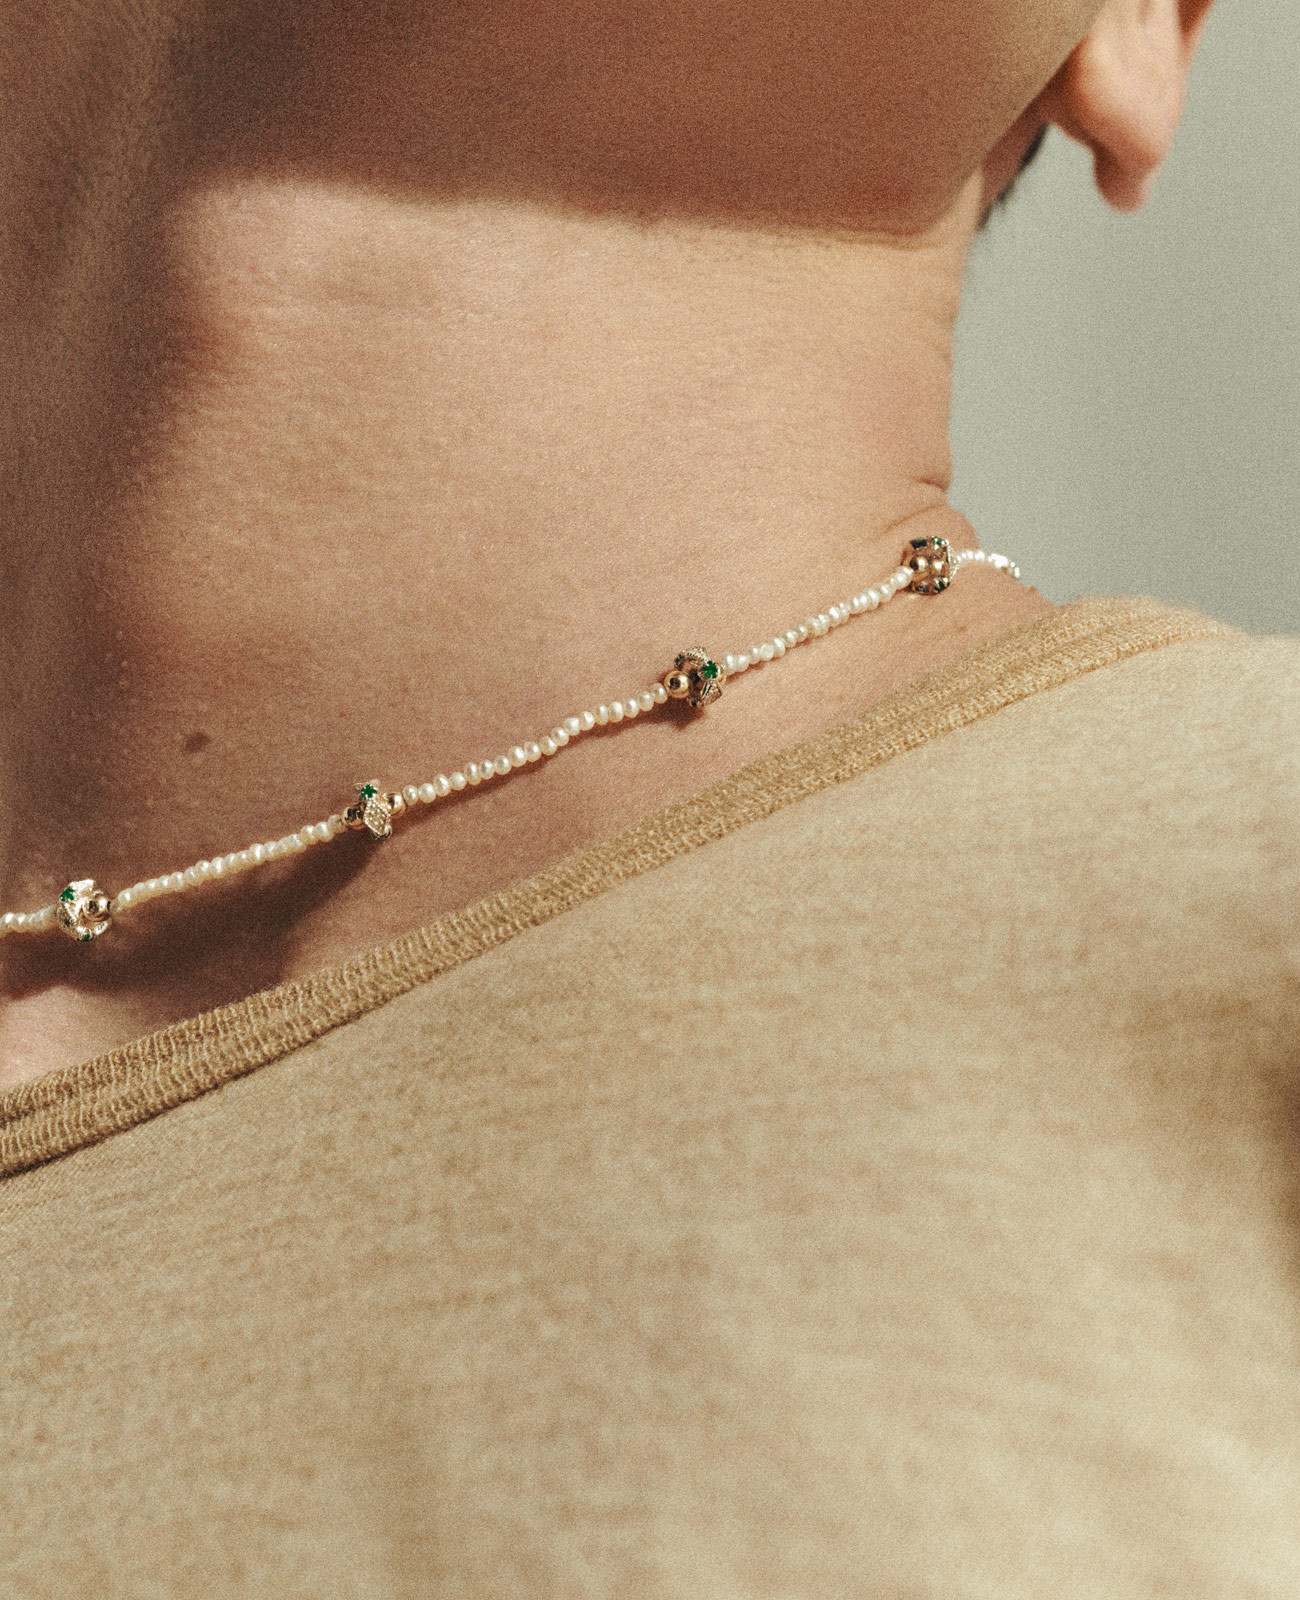 CHELSEA N°1 necklace pascale monvoisin jewelry paris